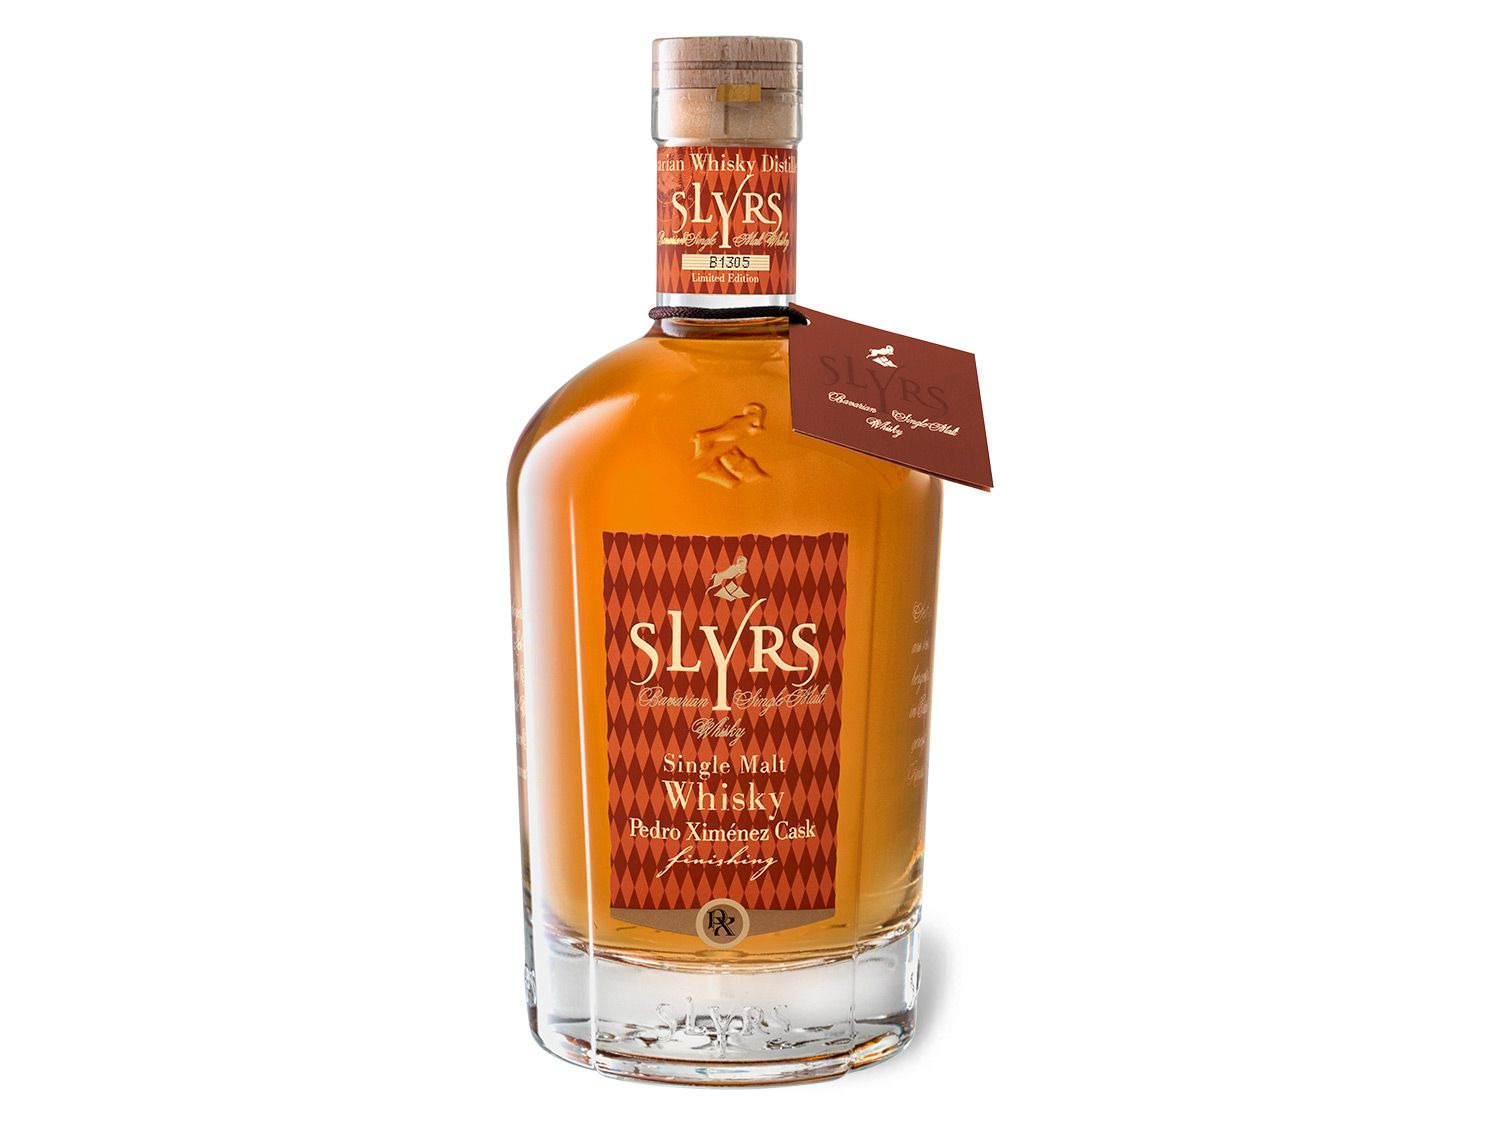 Slyrs Bavarian Single Malt Whisky Edition Pedro Ximen